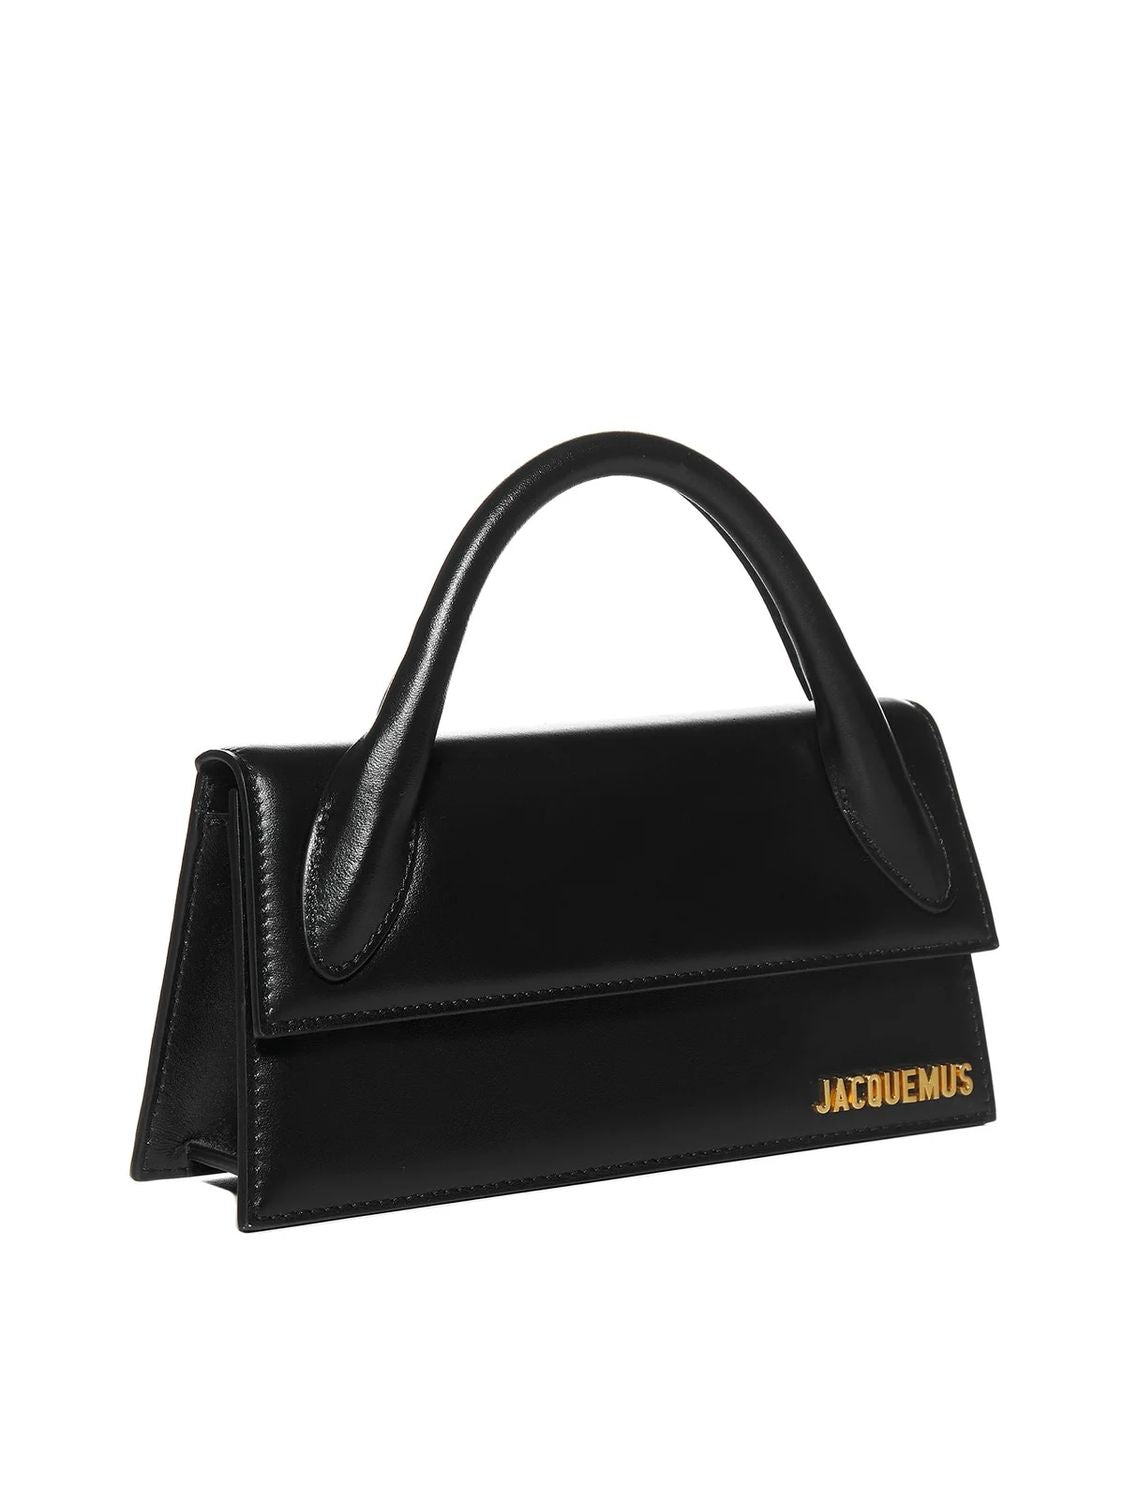 JACQUEMUS Long Mini Iconic Black Leather Crossbody Bag for Women